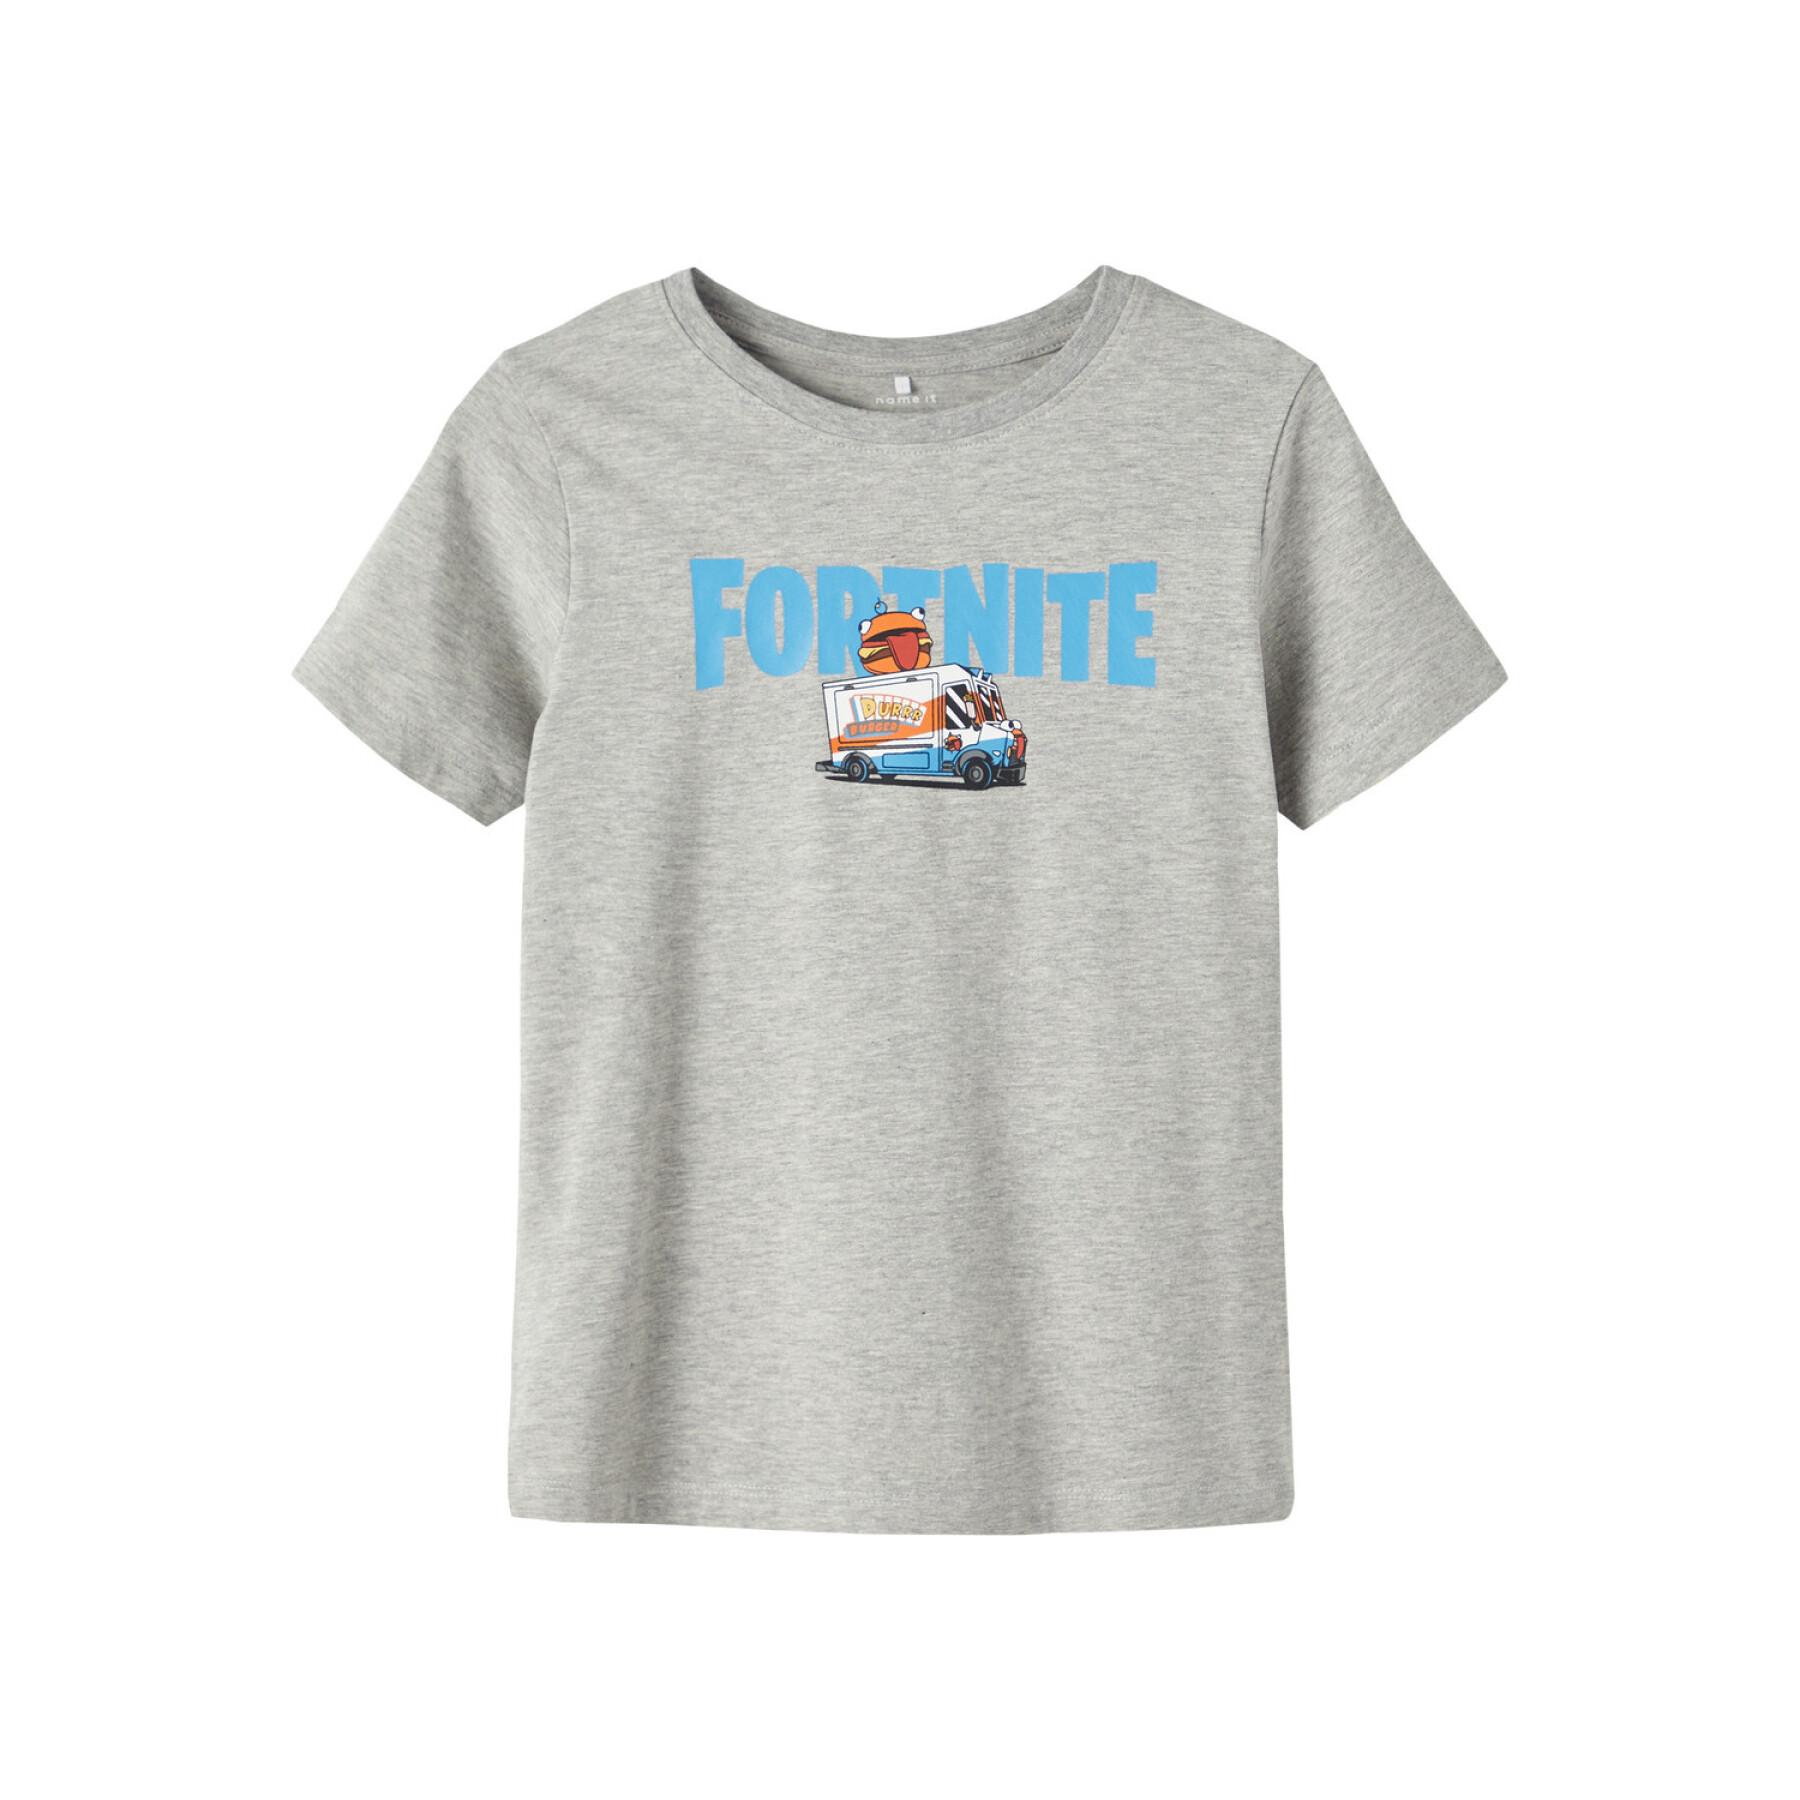 T-shirt för barn Name it Alonso Fortnite